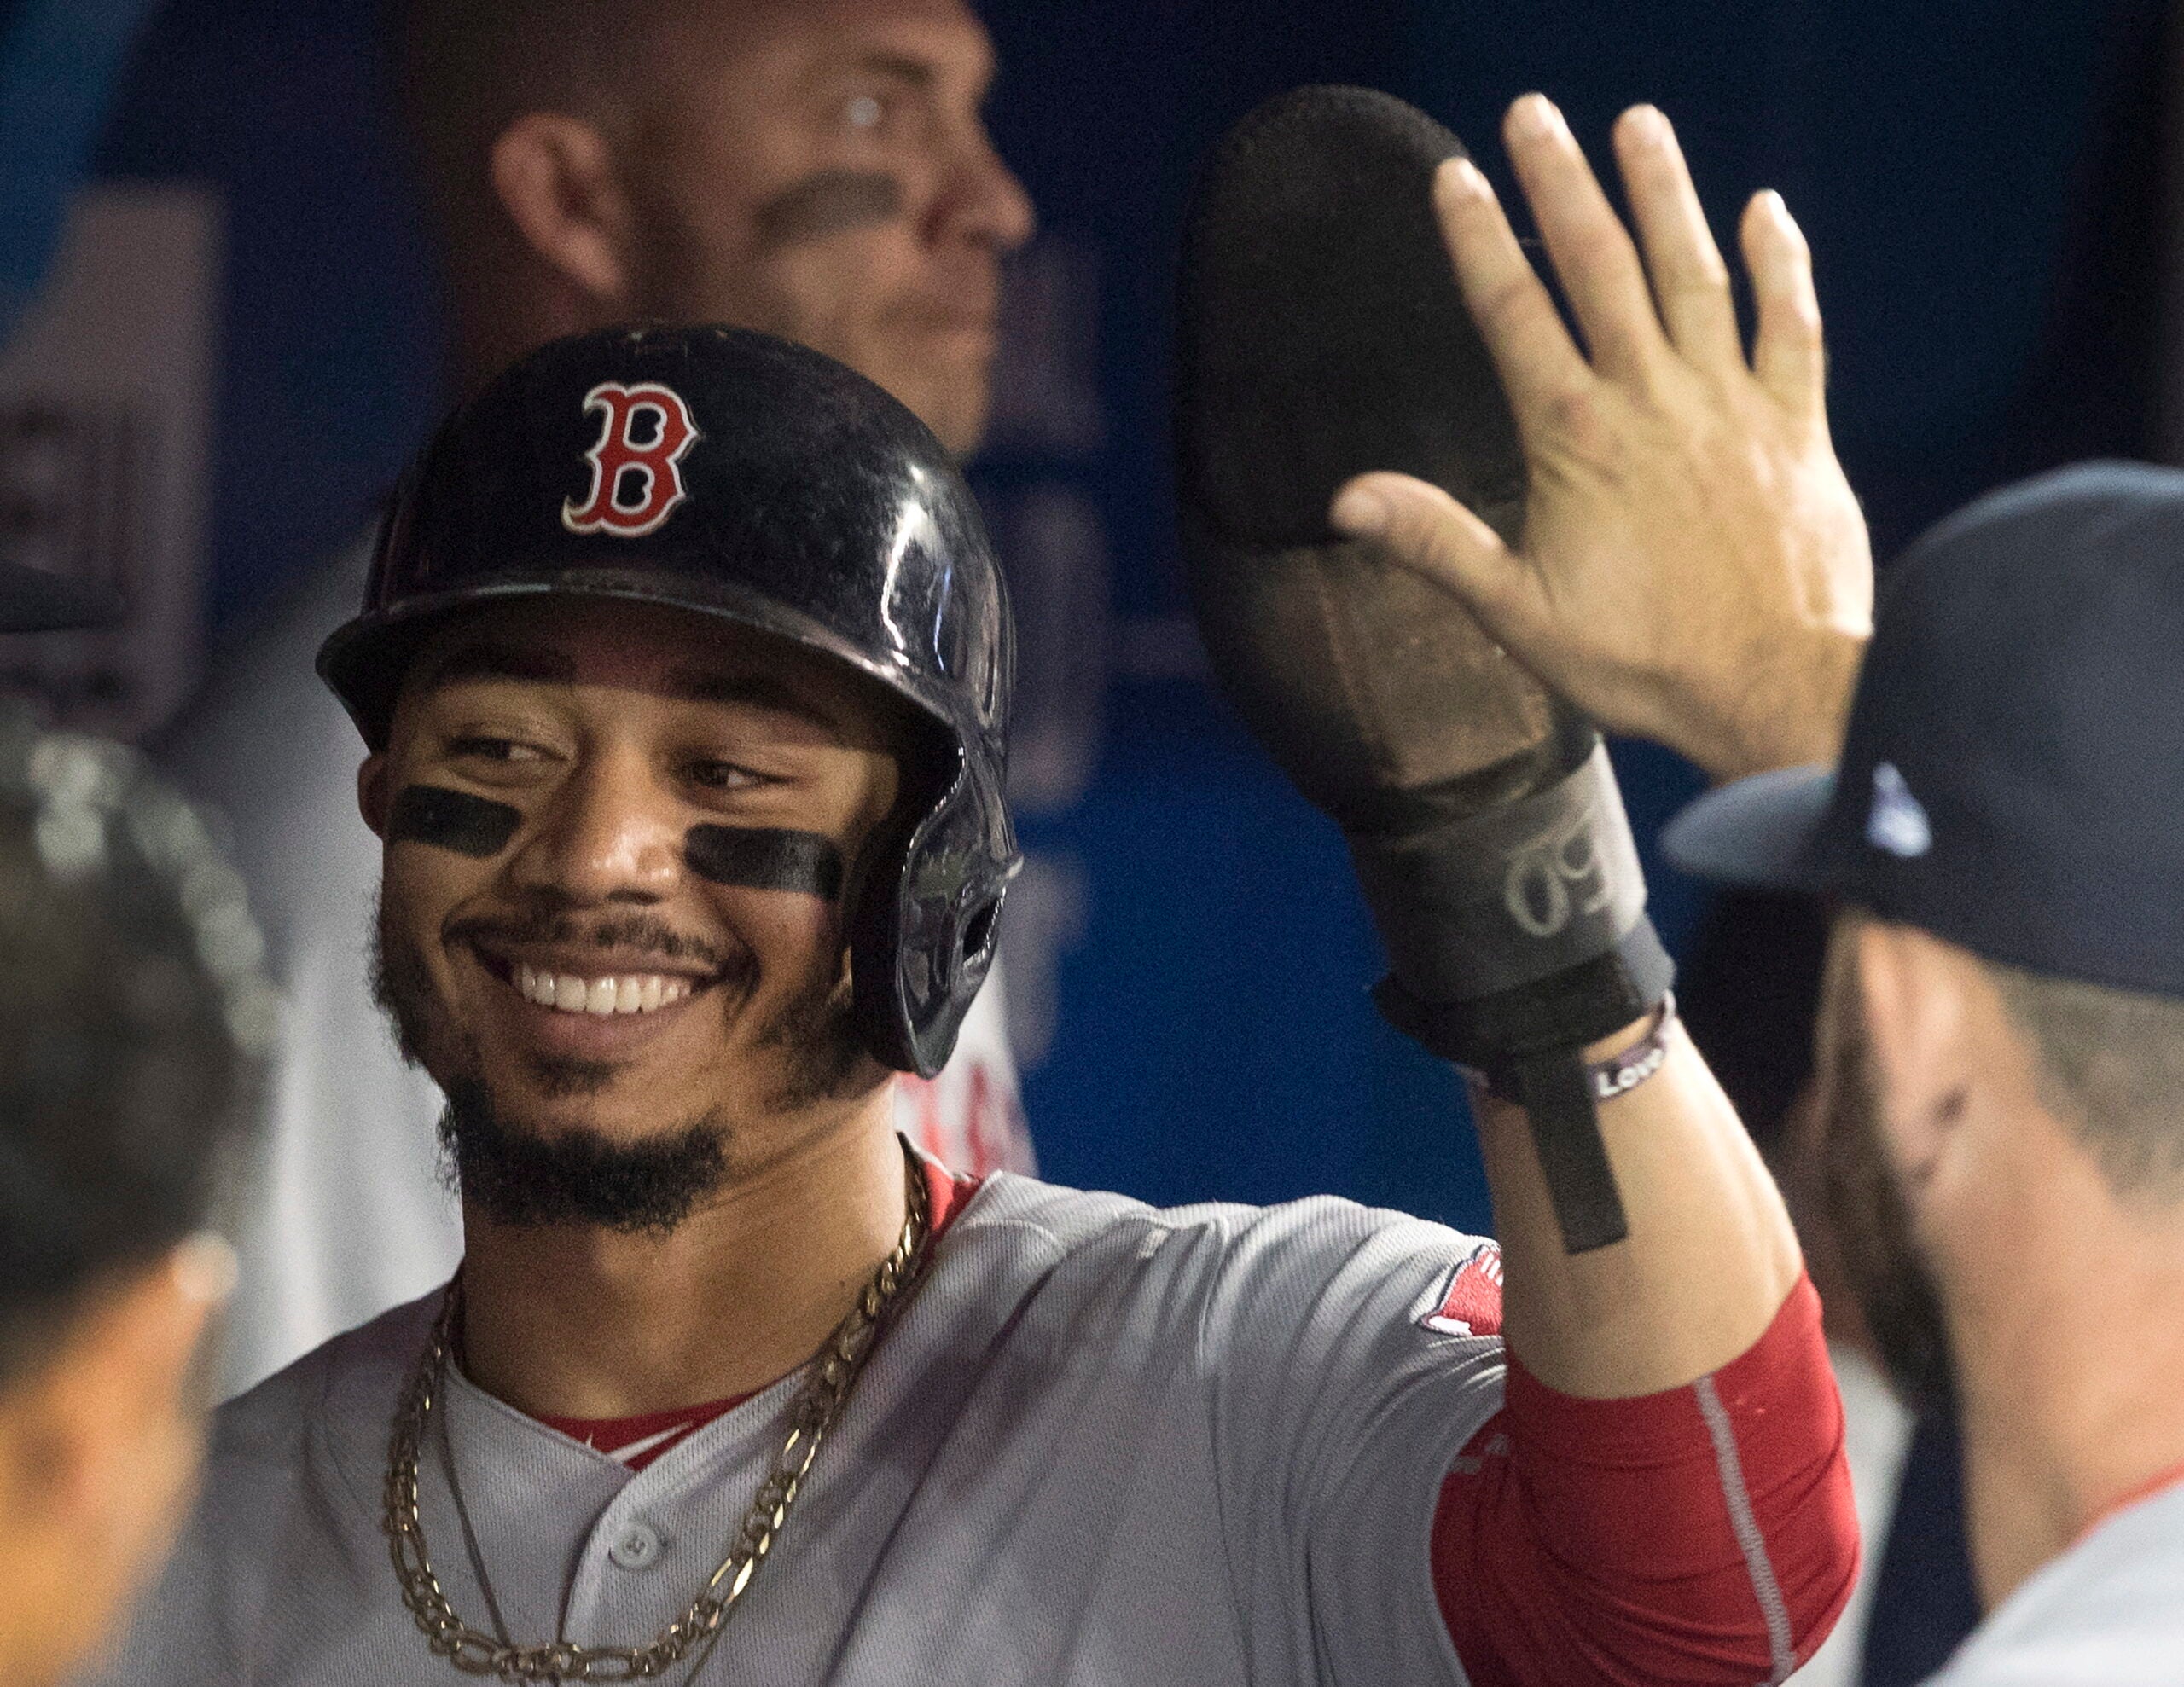 Boston Red Sox superstar Mookie Betts hits a 3-run home run